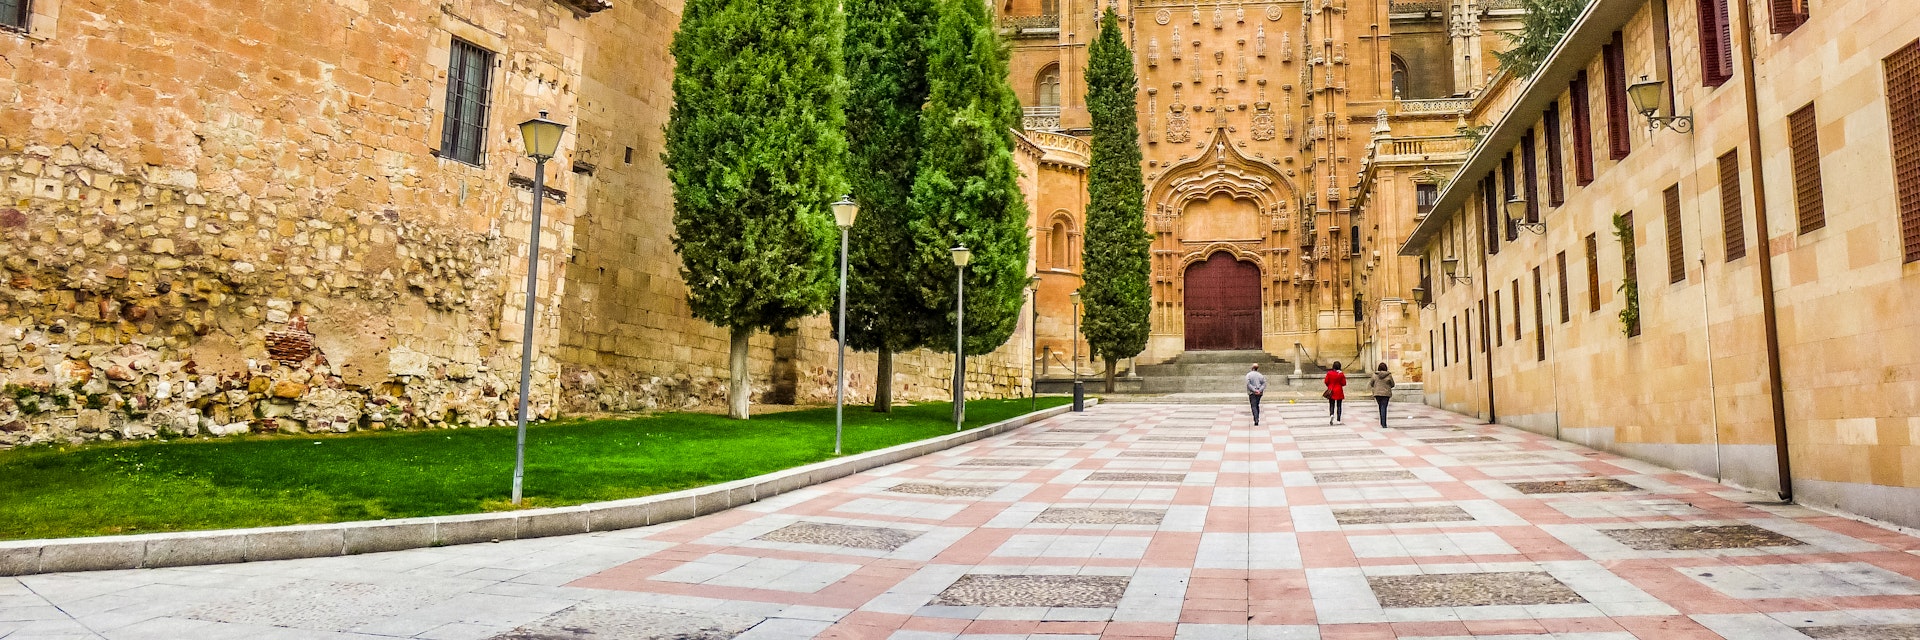 Beautiful view of Cathedral of Salamanca, Castilla y Leon region, Spain.